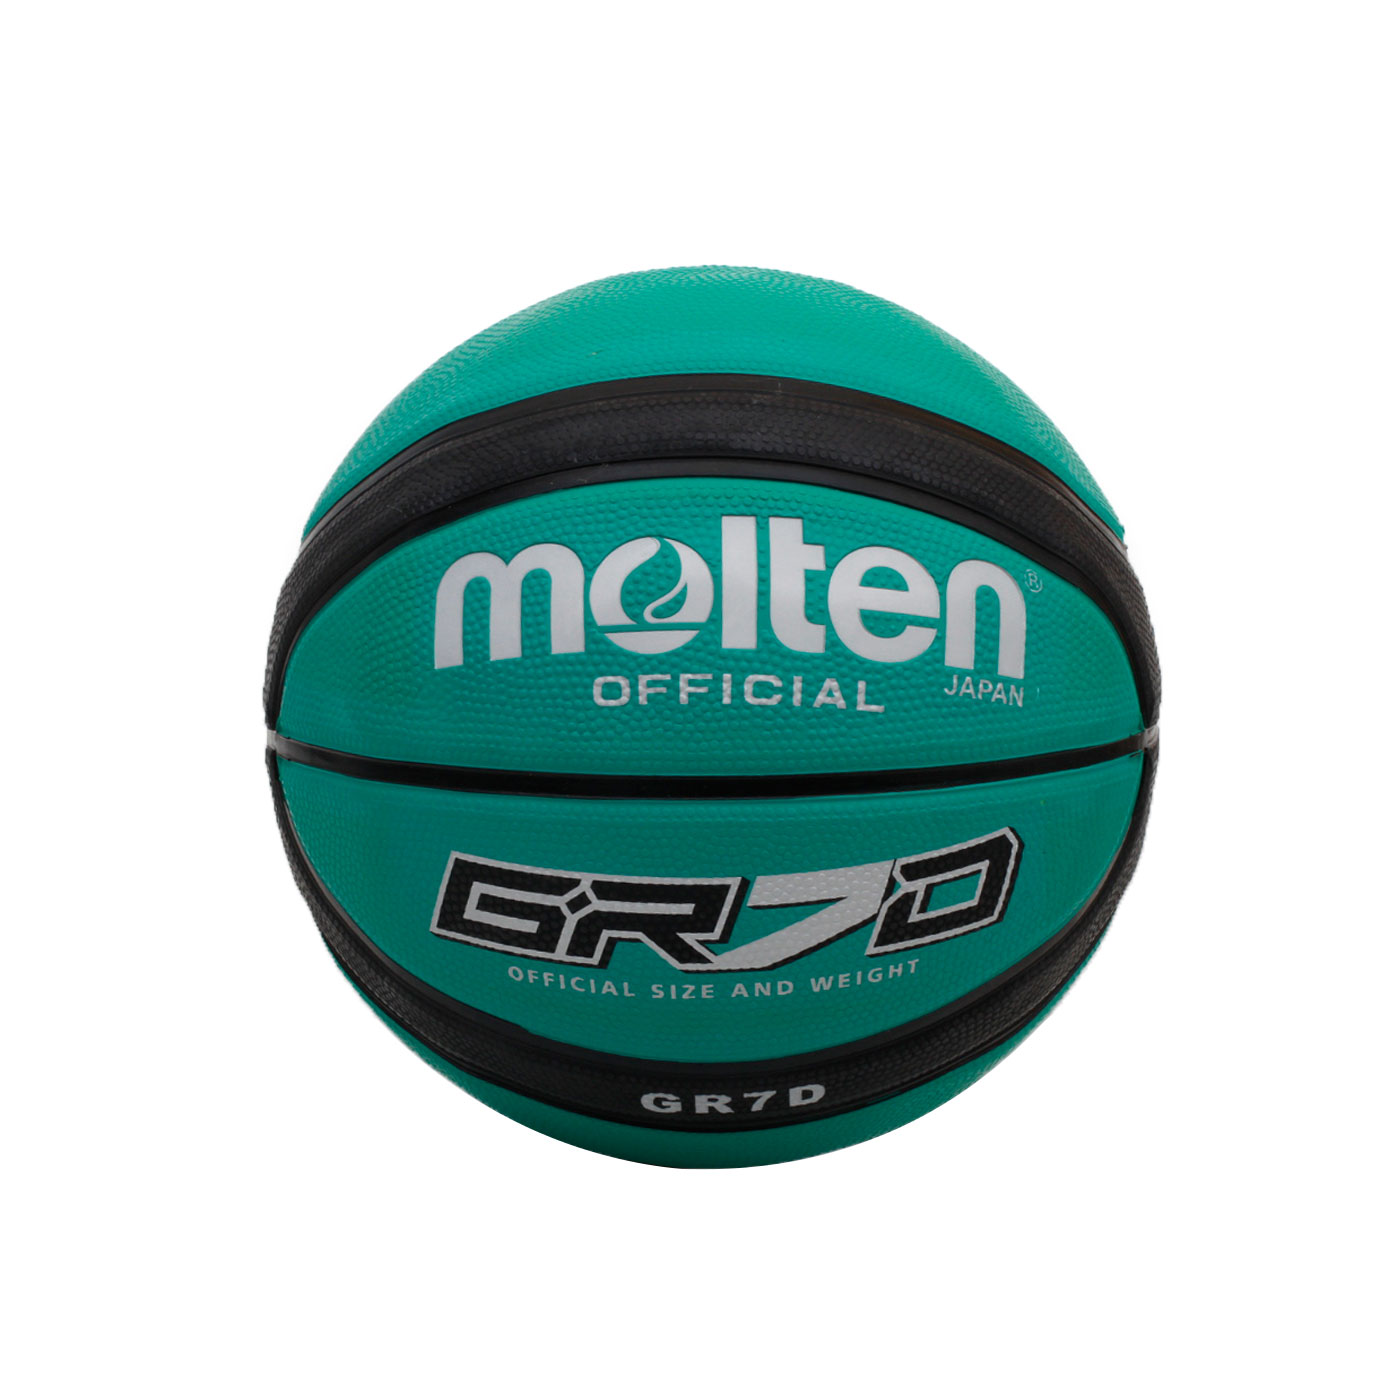 Molten 12片橡膠深溝籃球 BGR7D - 綠黑